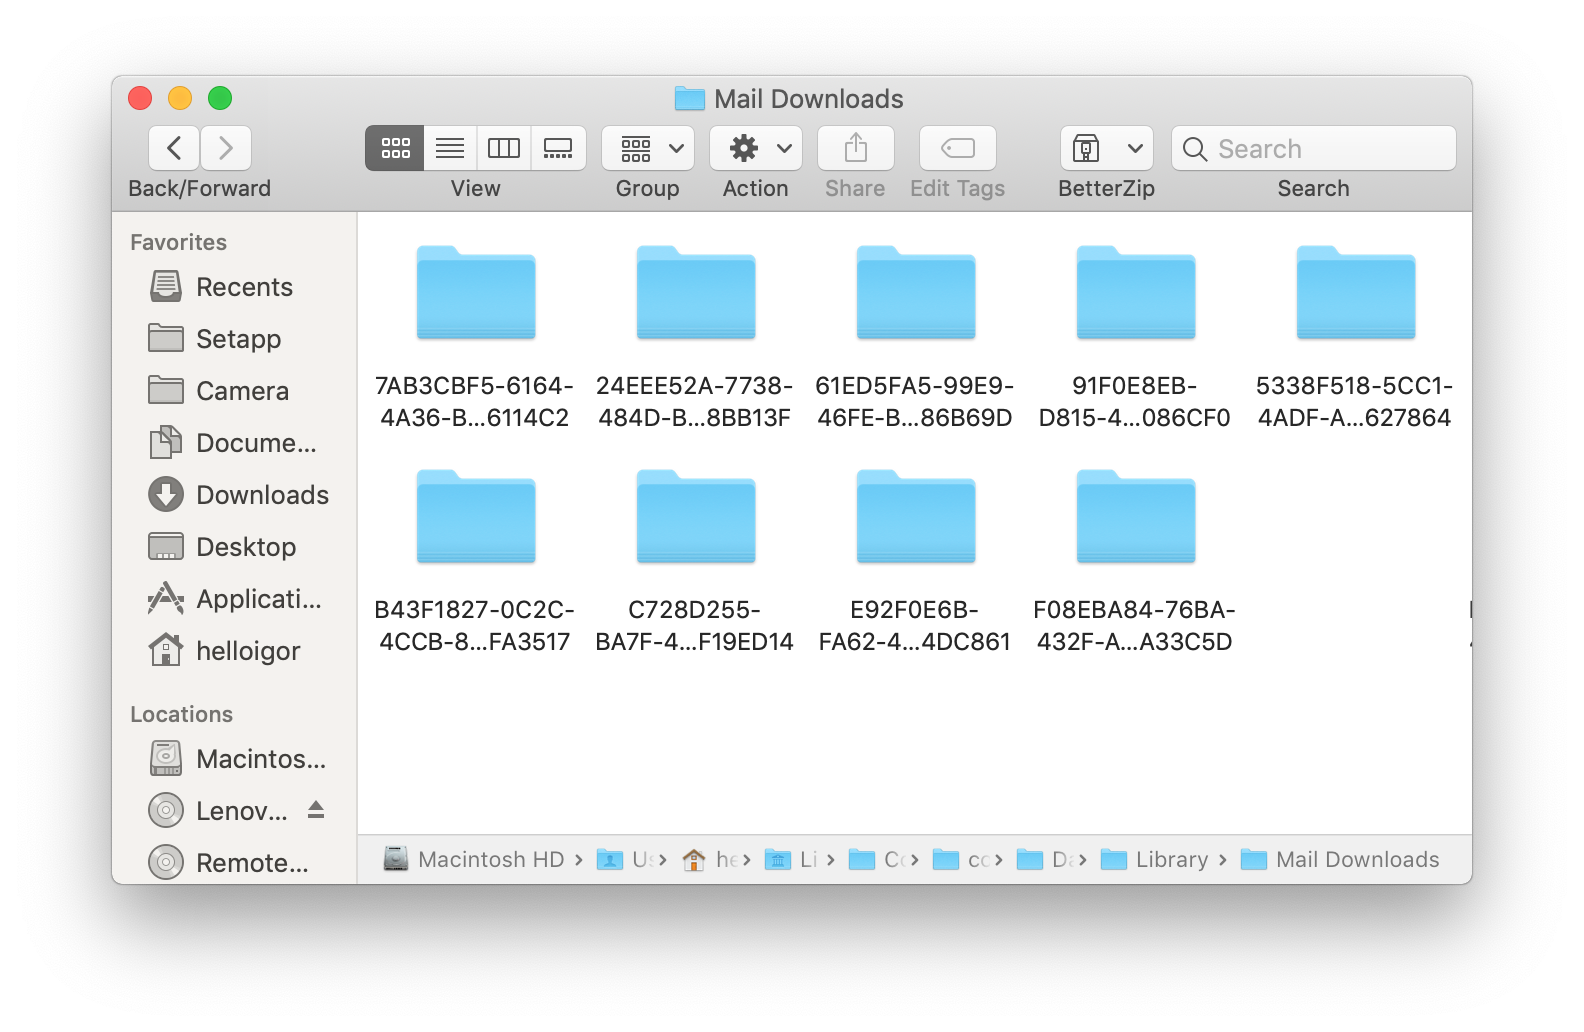 how to make space on mac hard drive